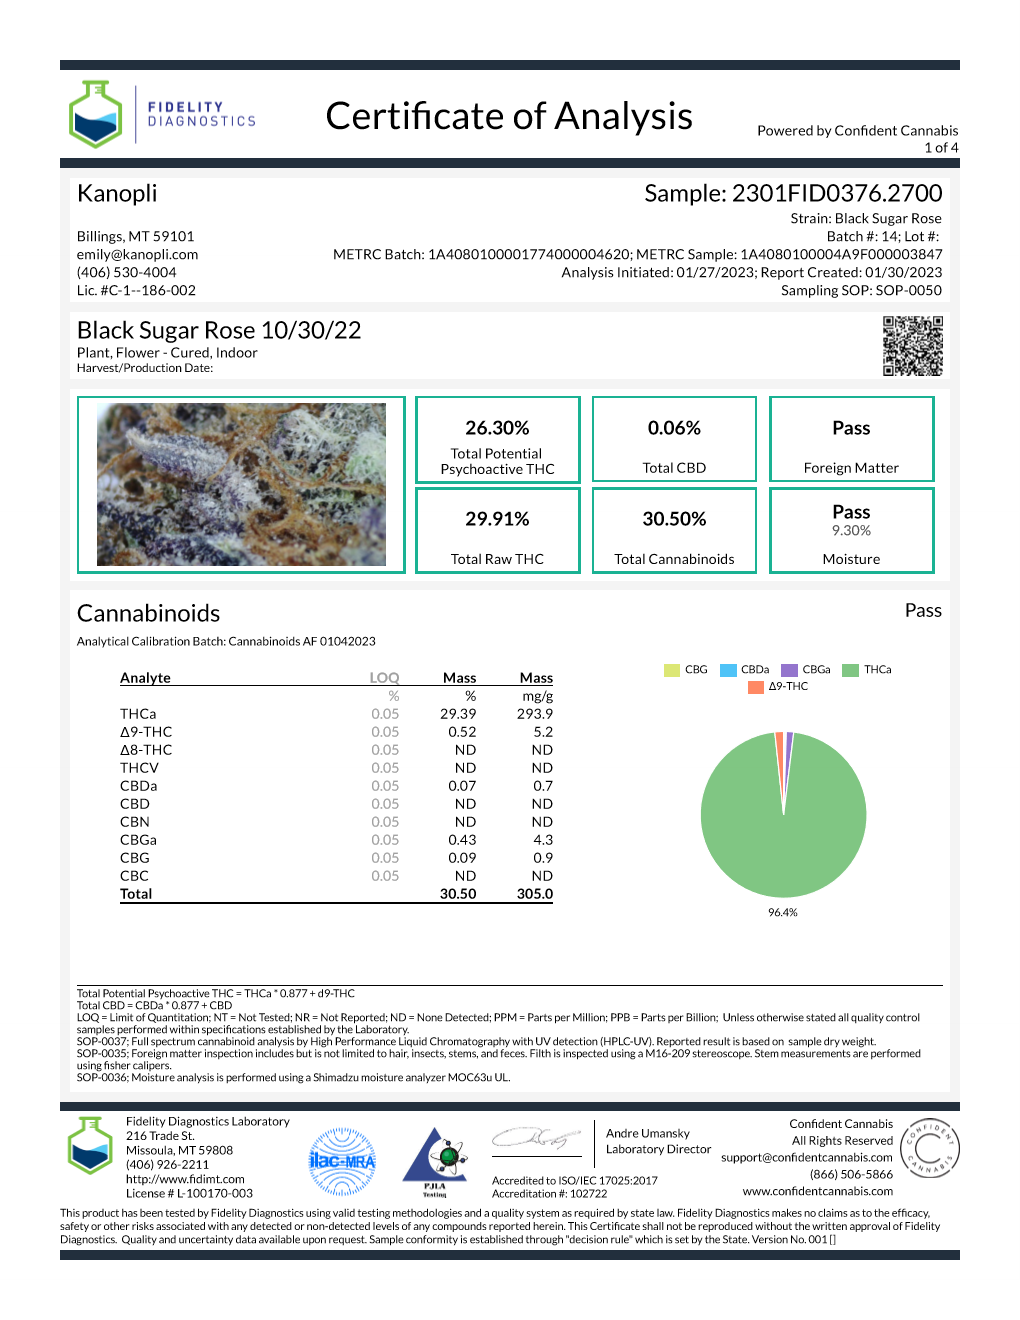 Black Sugar Rose - Indica 26.30% THC (Oct. 2022) MEDICAL